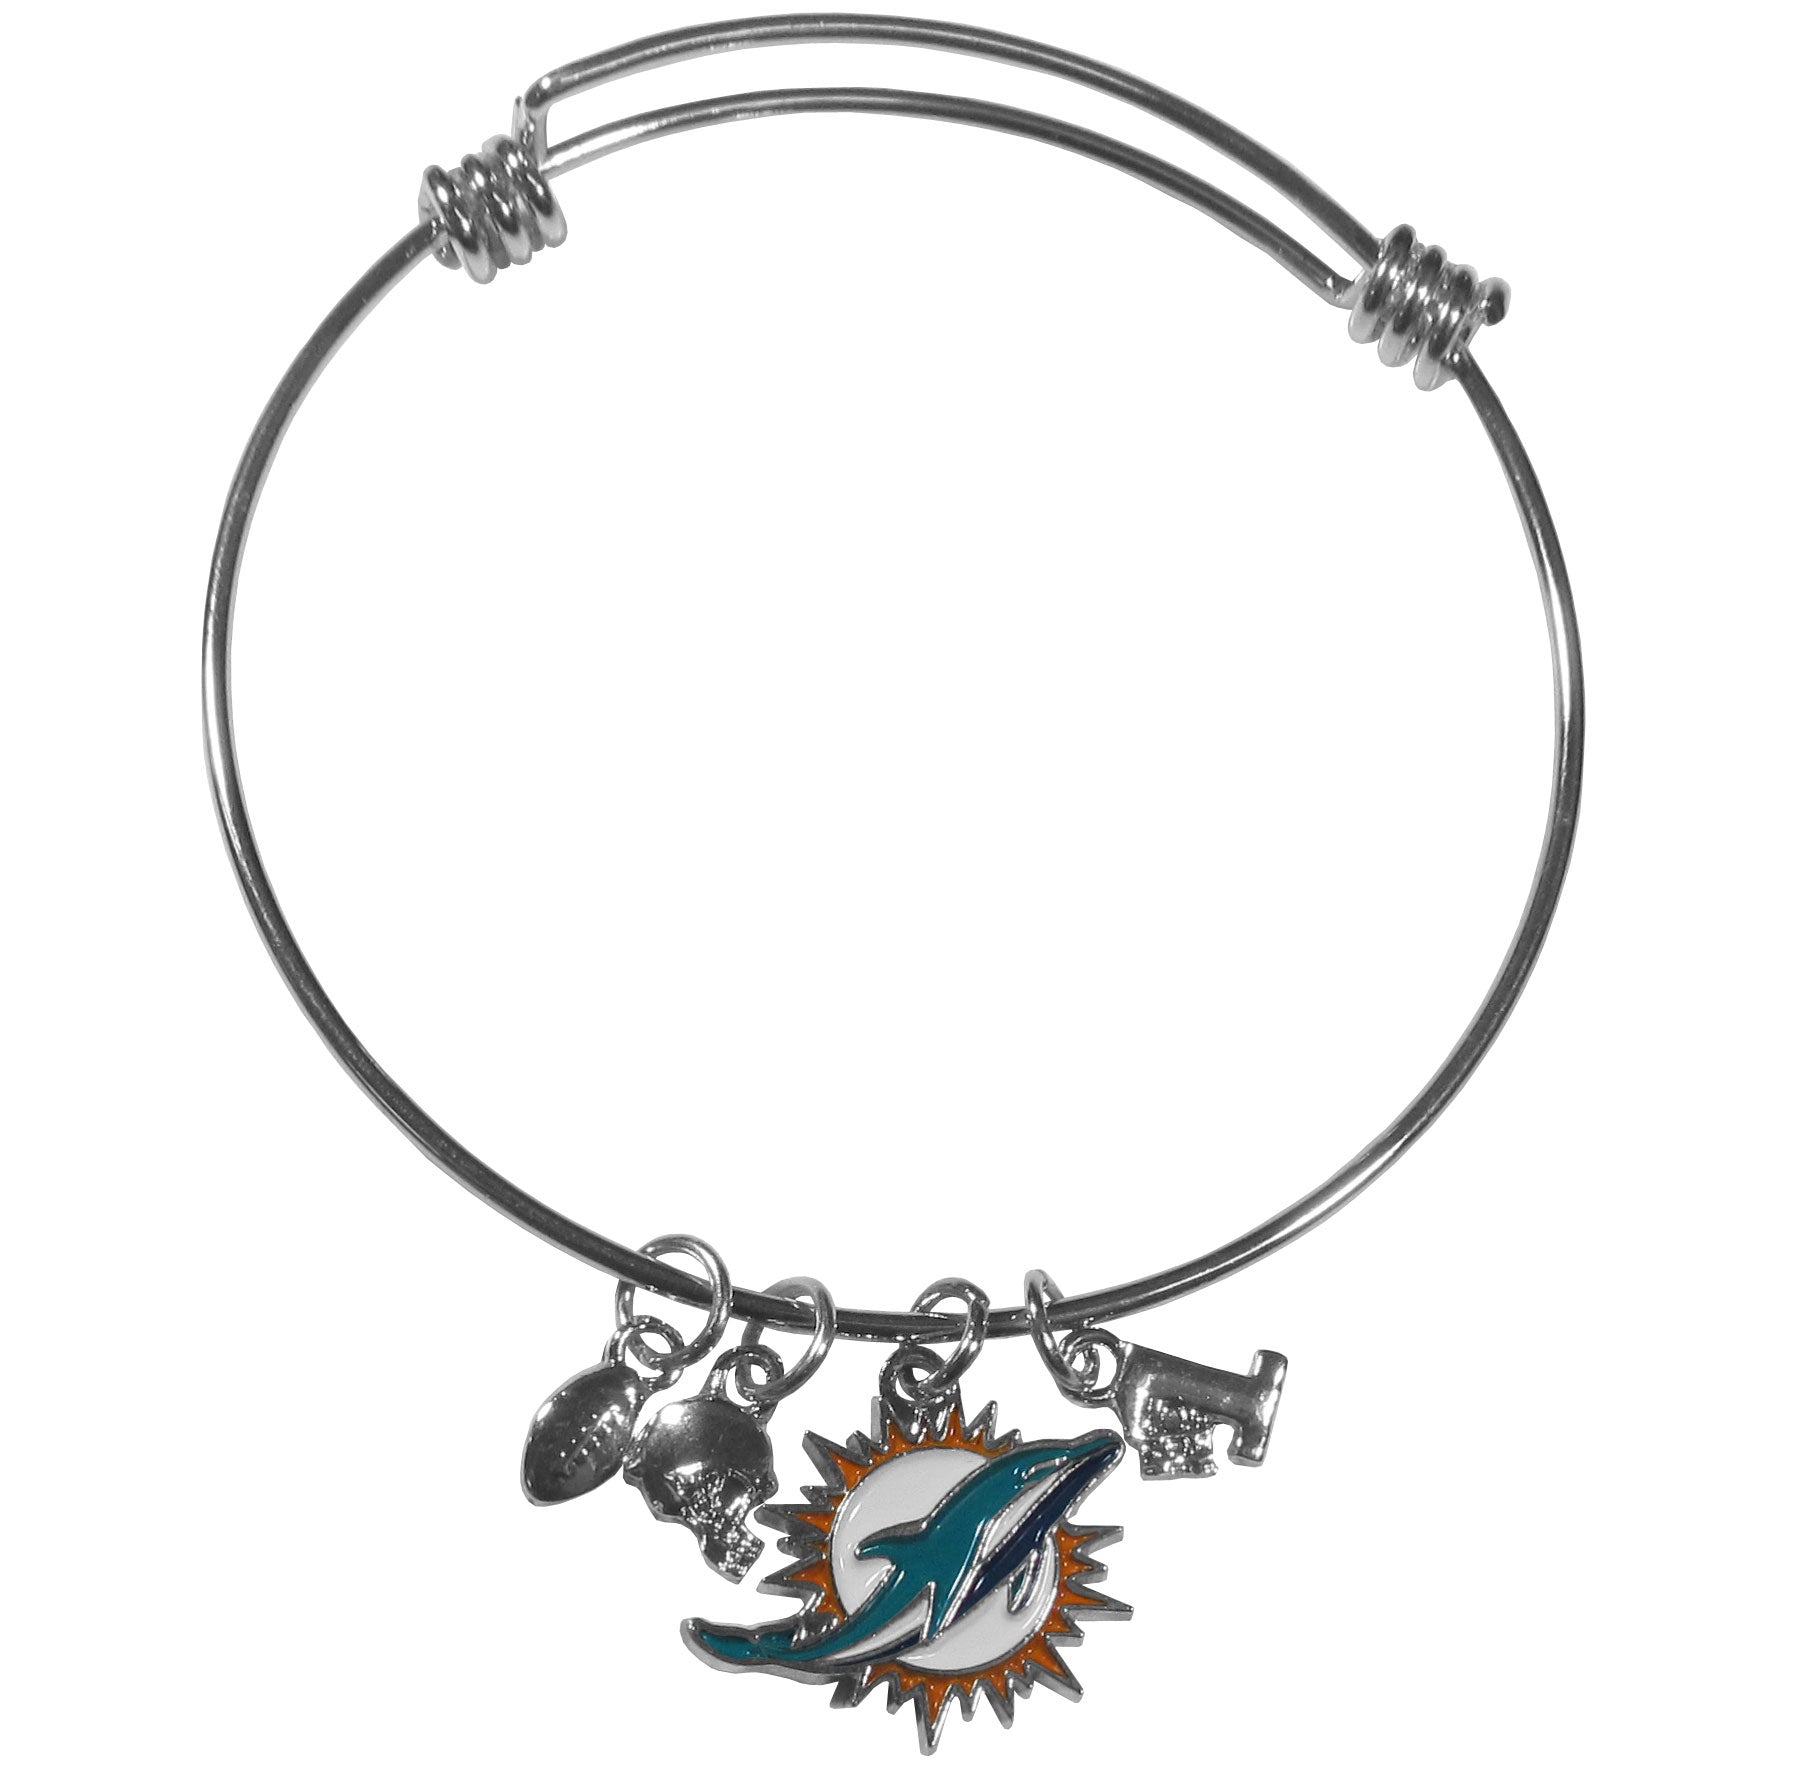 Miami Dolphins Charm Bangle Bracelet - Silver